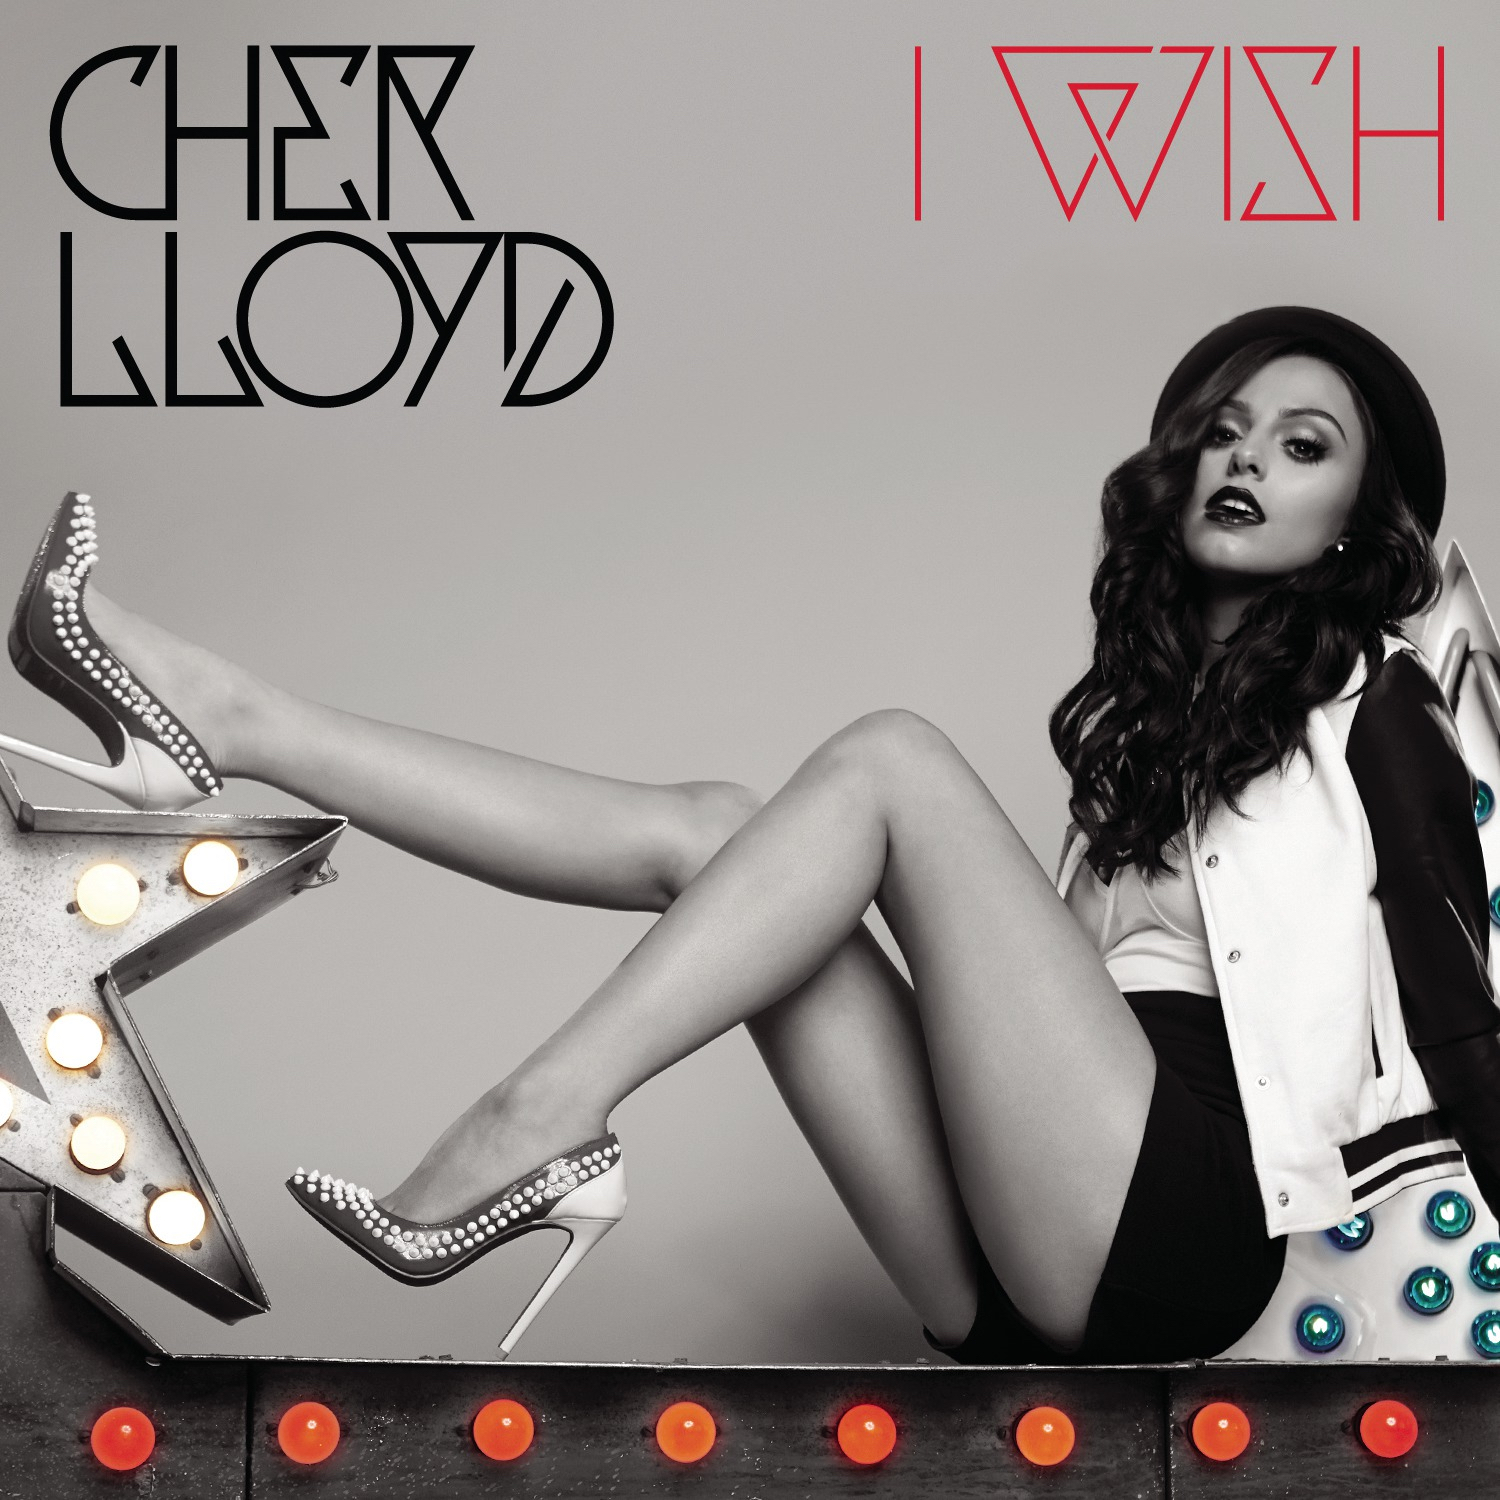 Cher Lloyd I Wish cover artwork